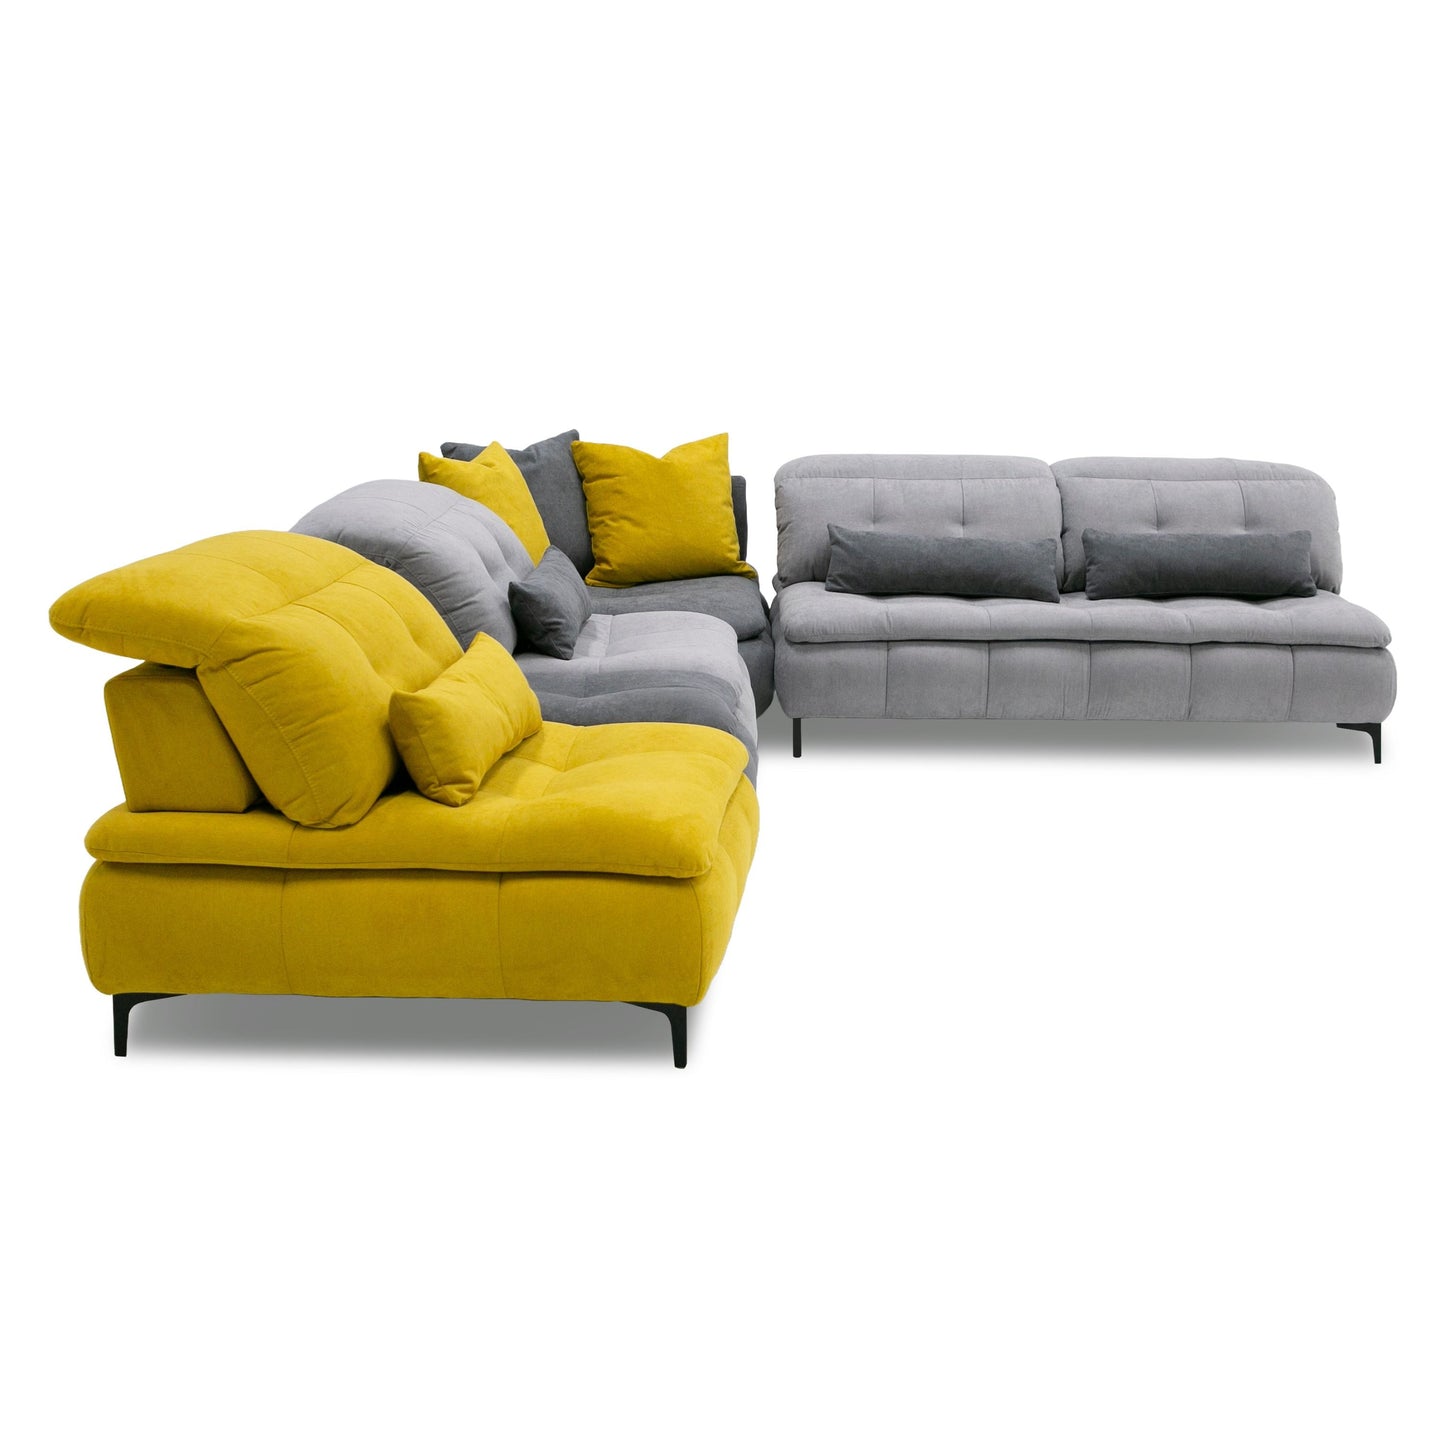 David Ferrari Mikado - Italian Modern Grey + Yellow Fabric Modular Sectional Sofa